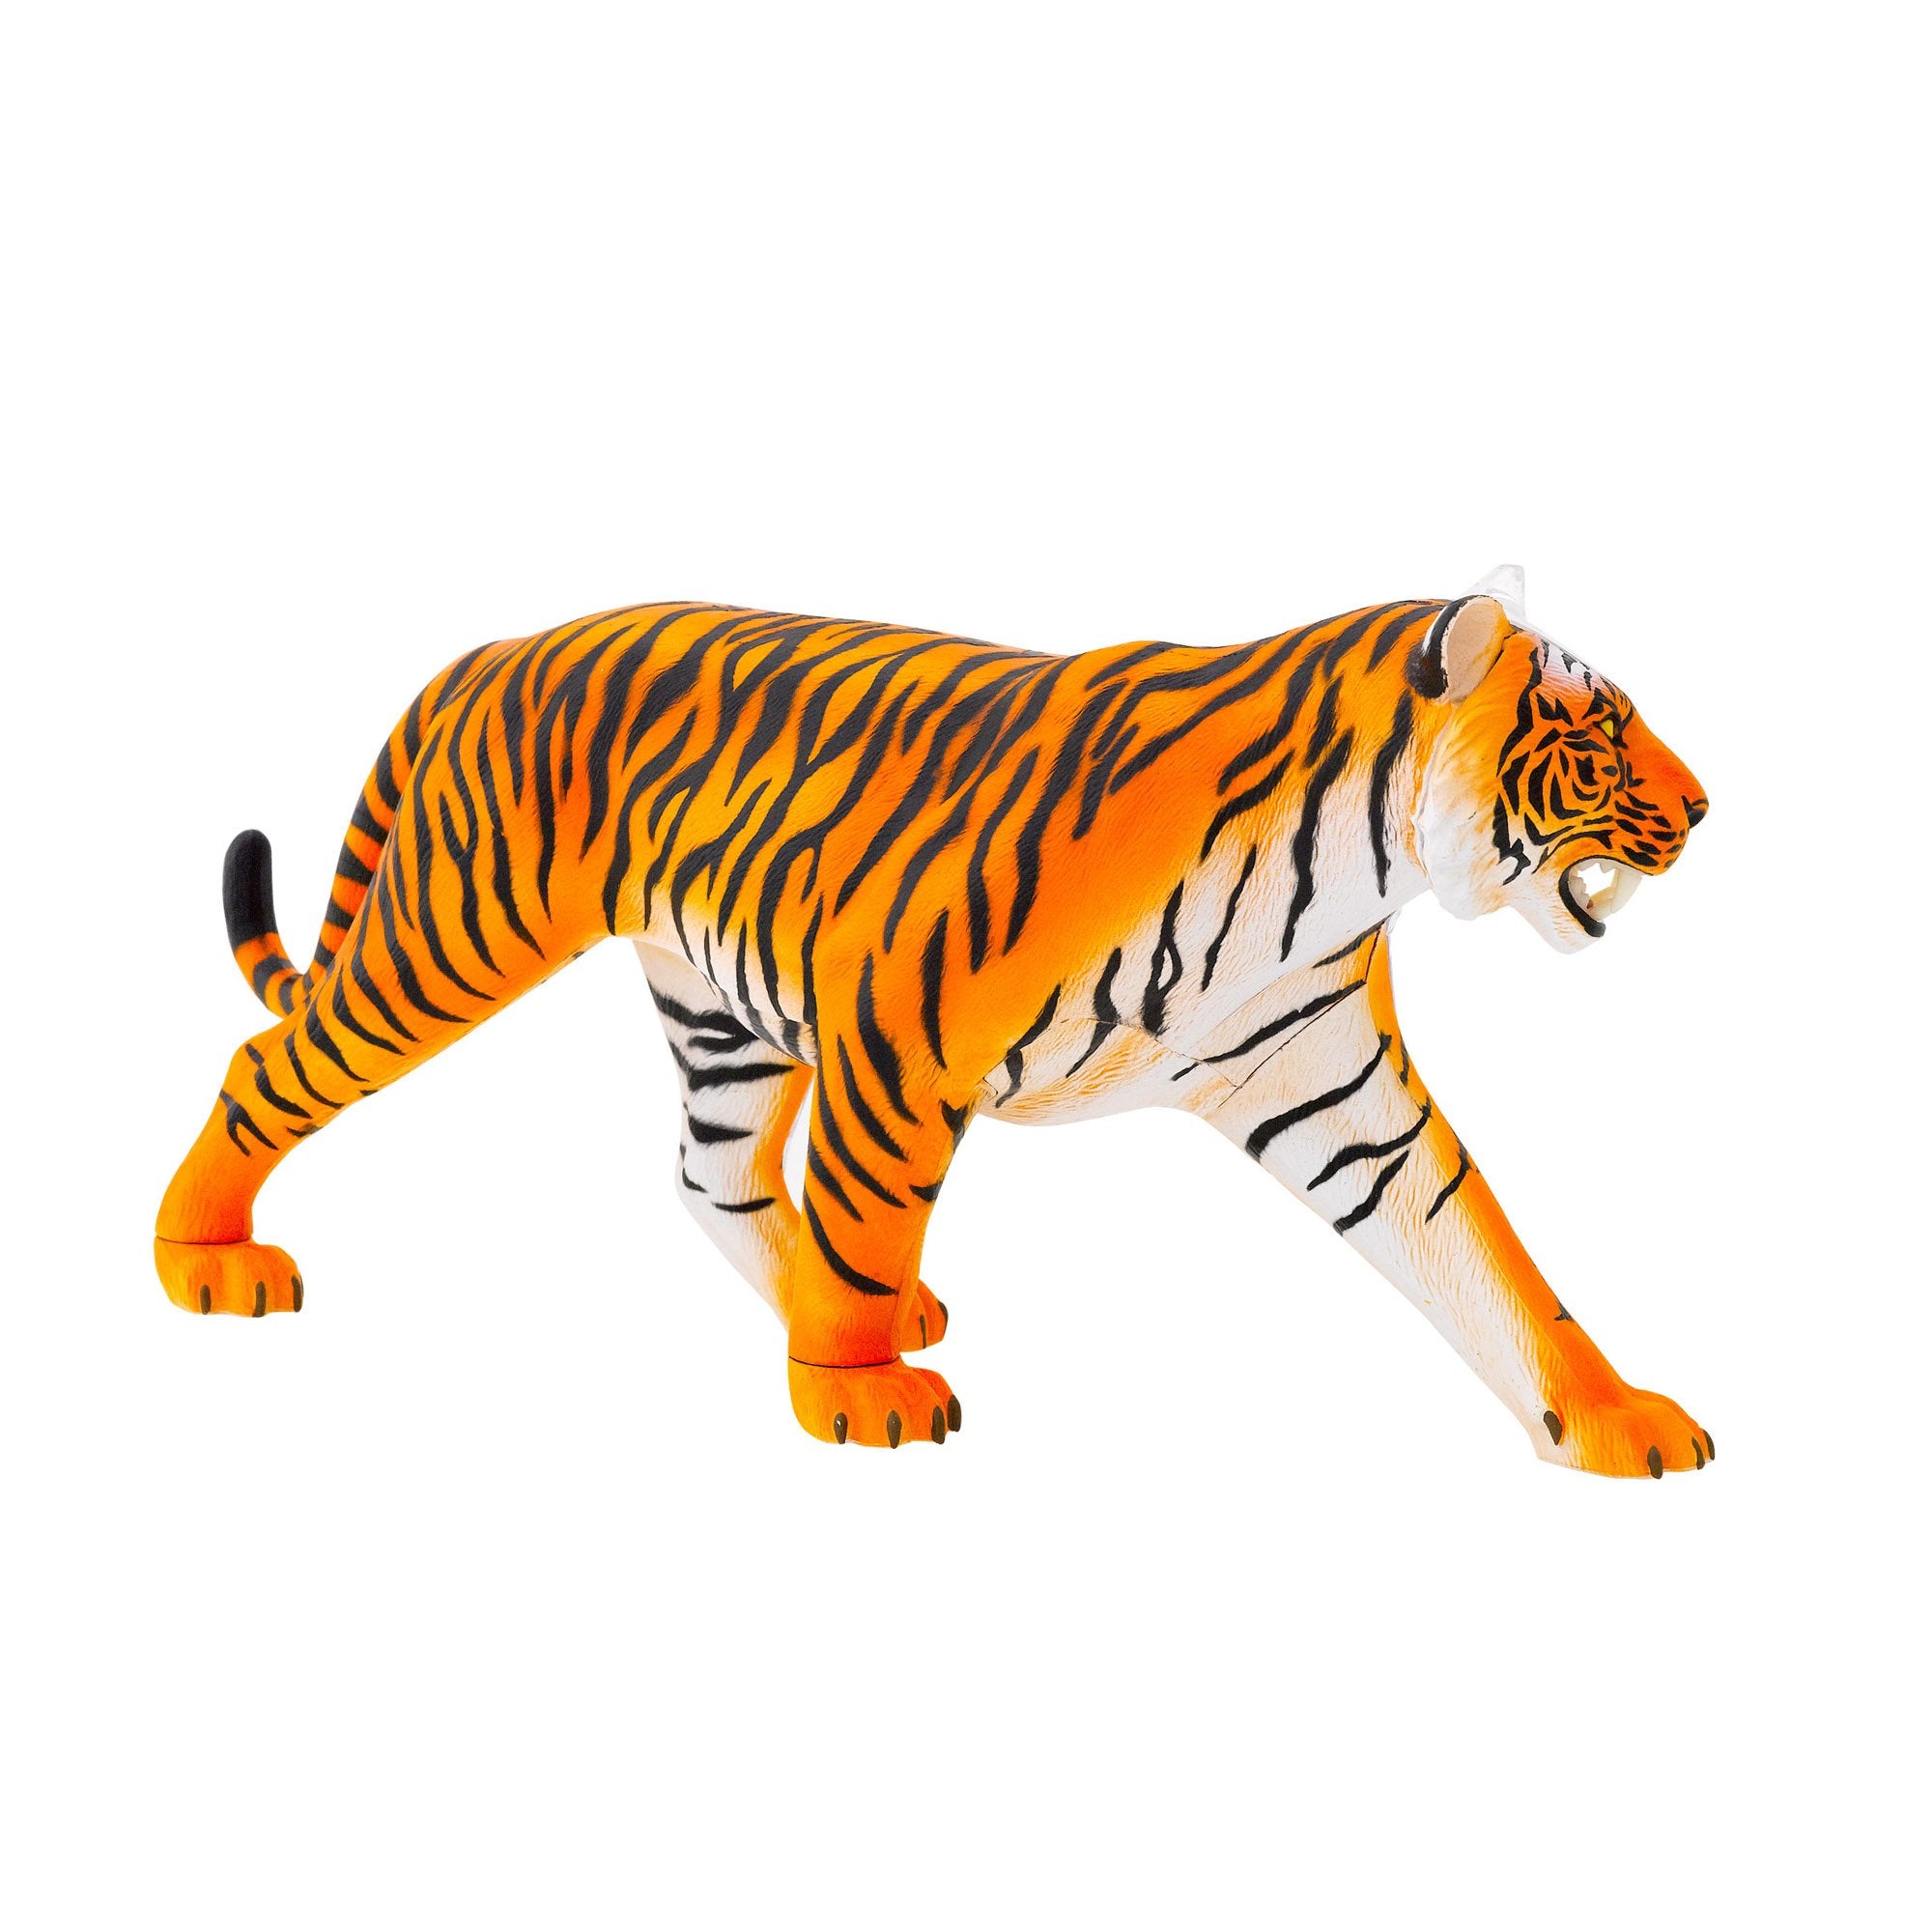 Tiger Anatomy Model